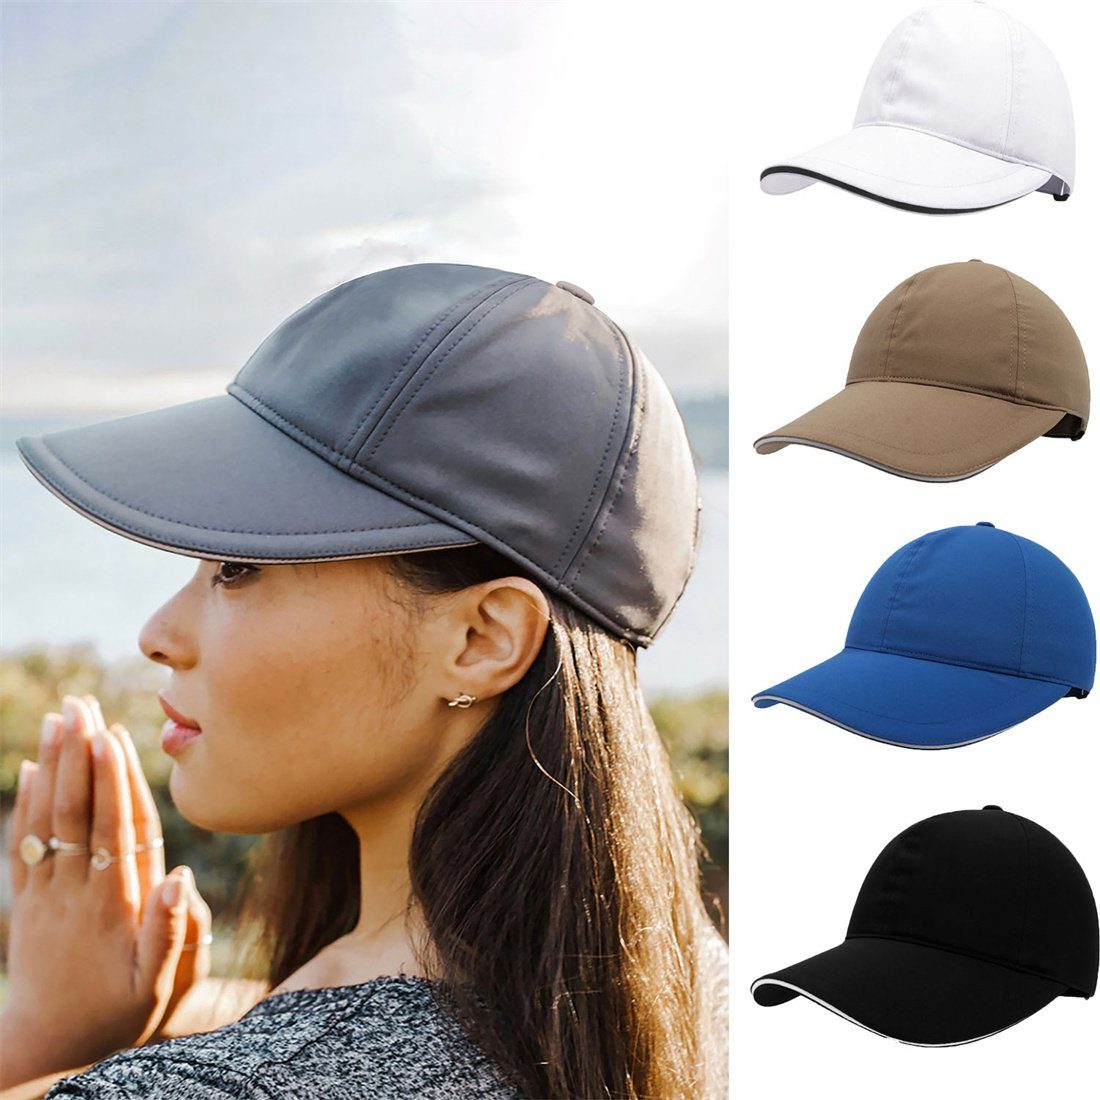 Outdoor-Baseballkappe Kappe,Sonnenblende trocknende Cap für blau Baseball DÖRÖY Frauen,schnell